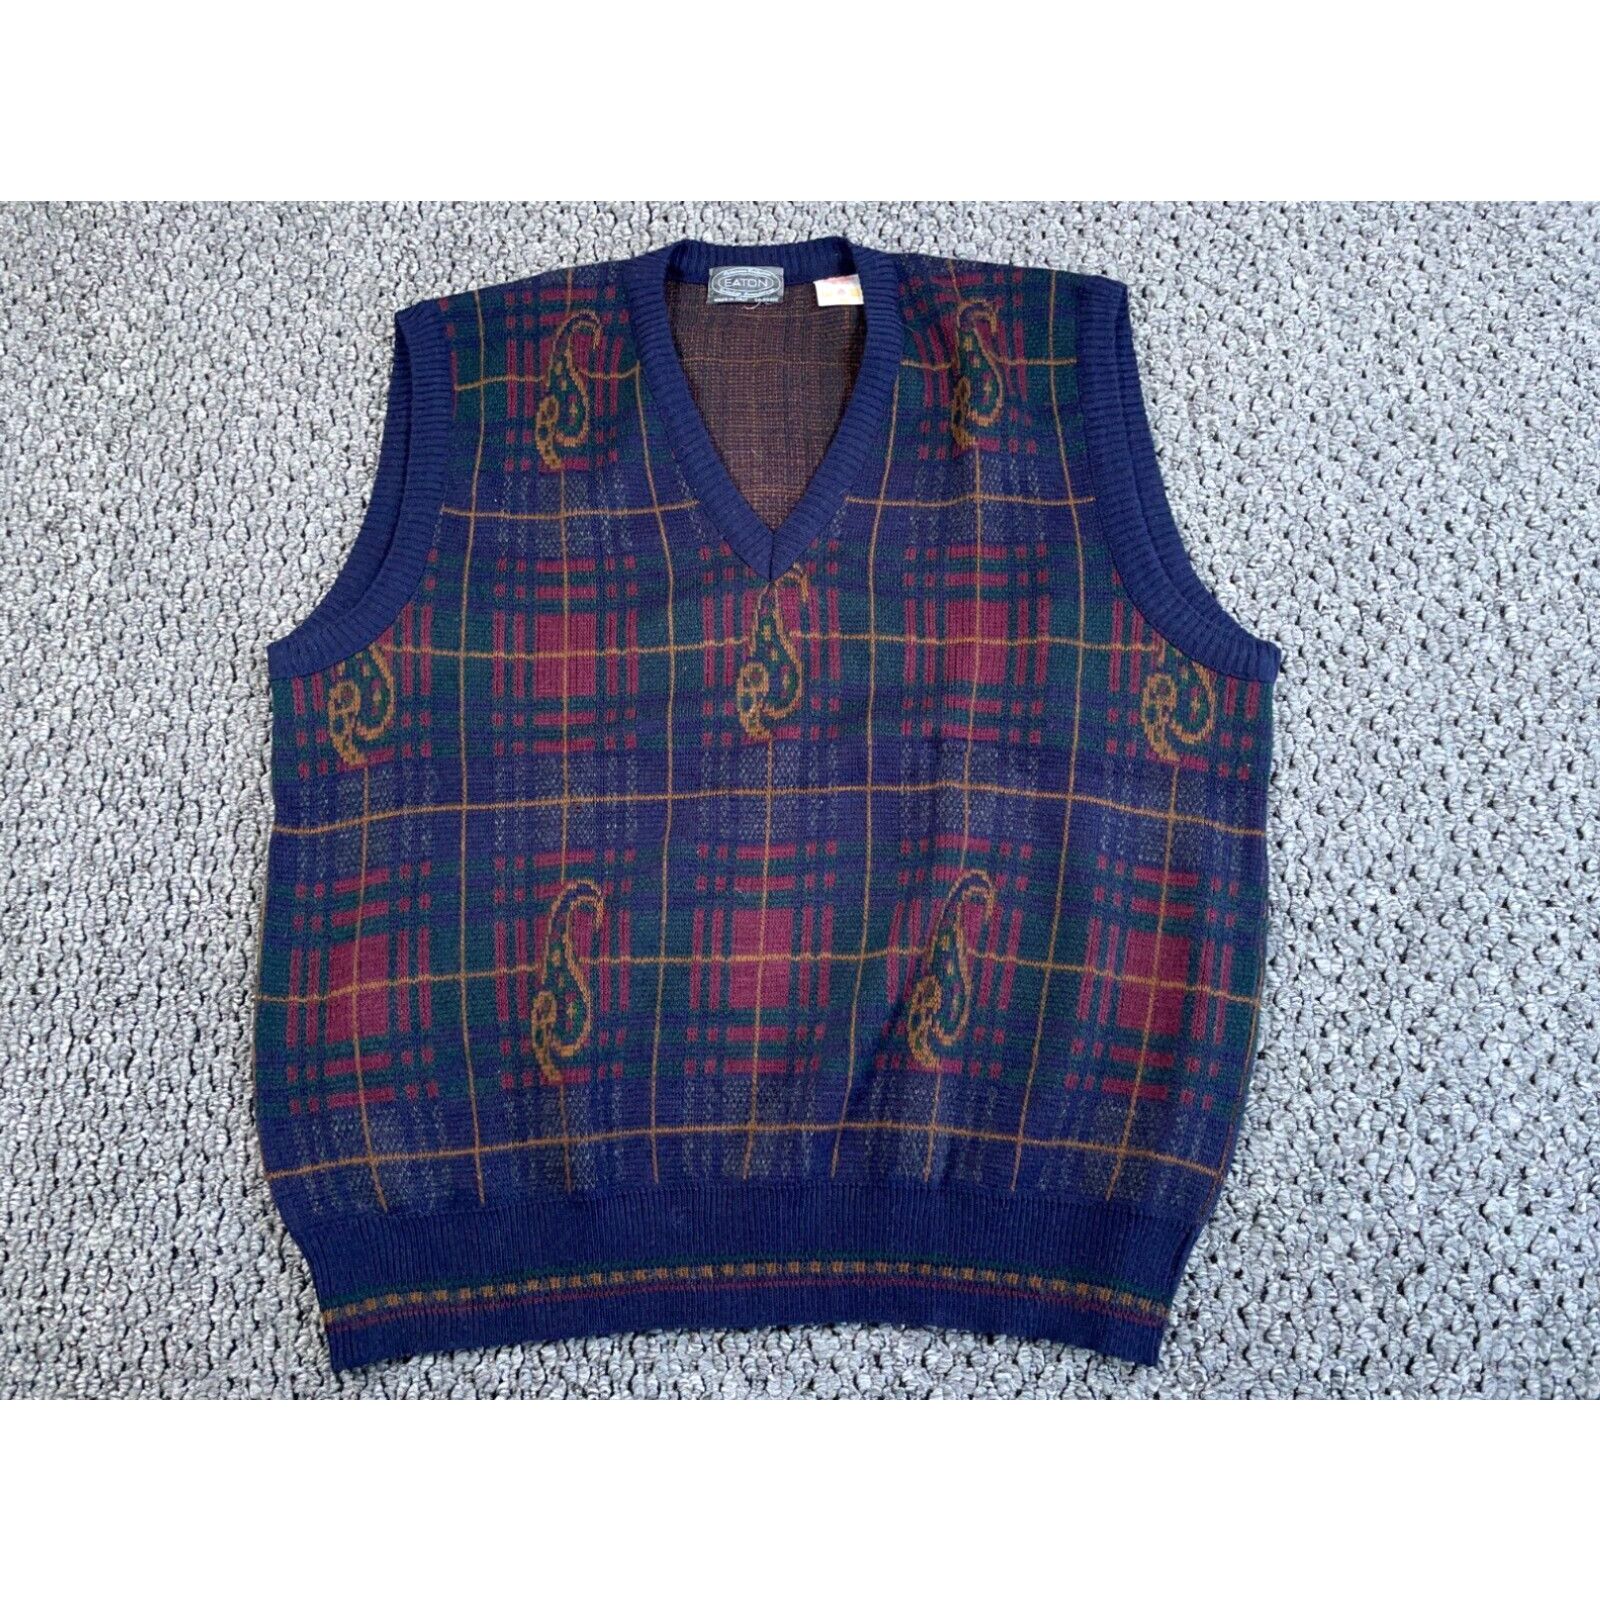 Vintage VTG 80s Eaton Shadow Plaid Paisley Sweater Vest Adult XL Blue Italy Knit Size US XL / EU 56 / 4 - 1 Preview